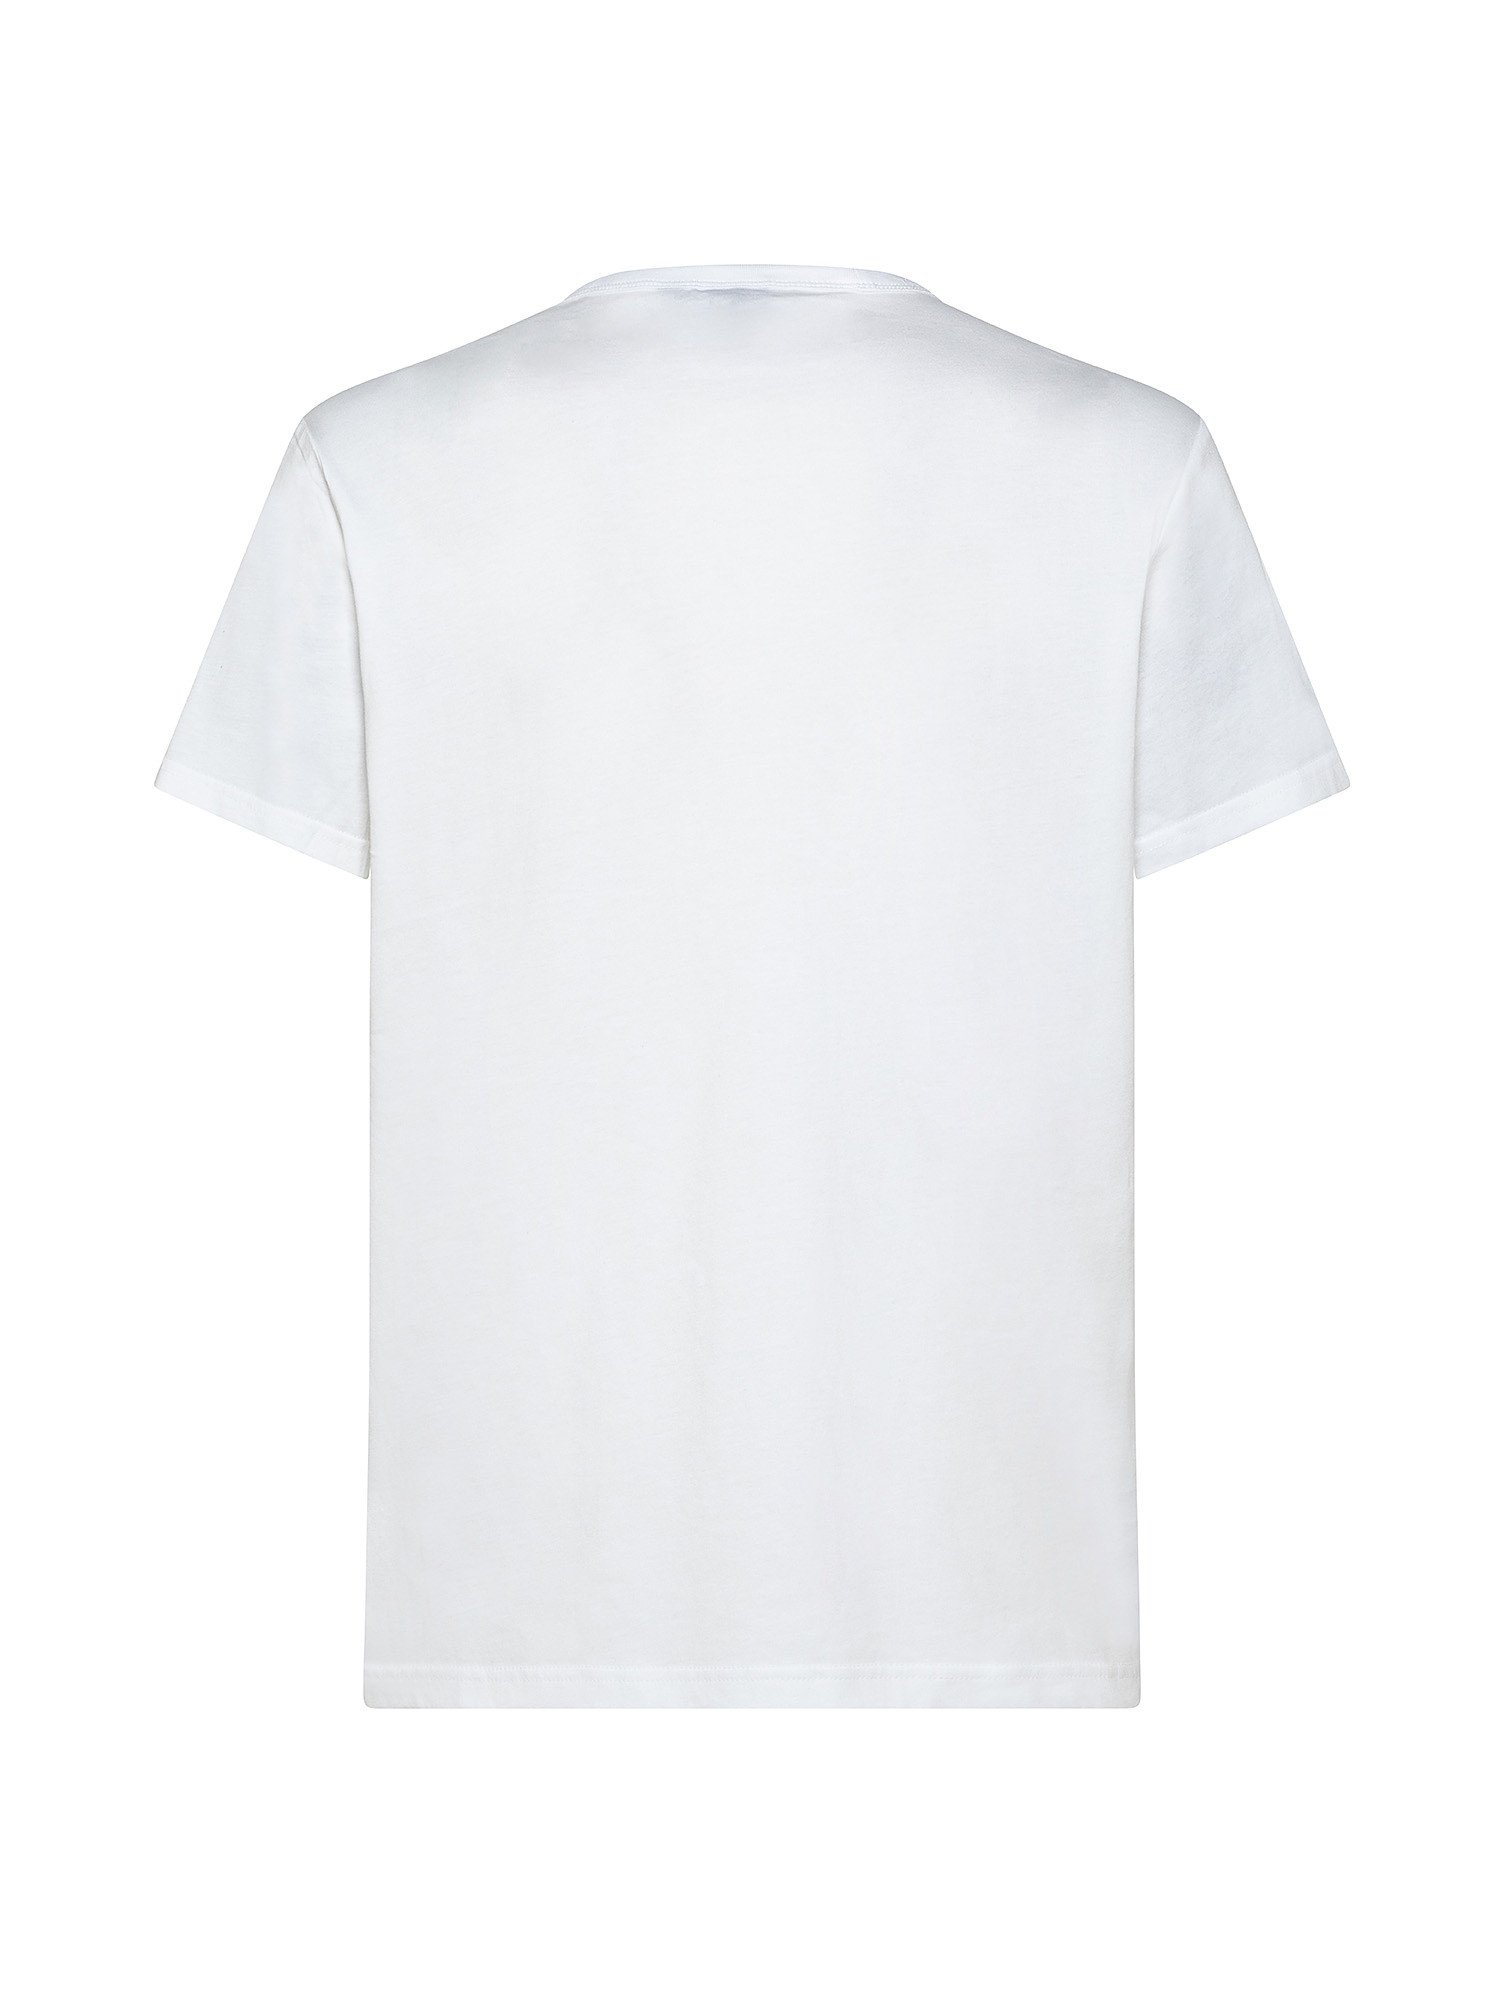 Holorn t-shirt, White, large image number 1